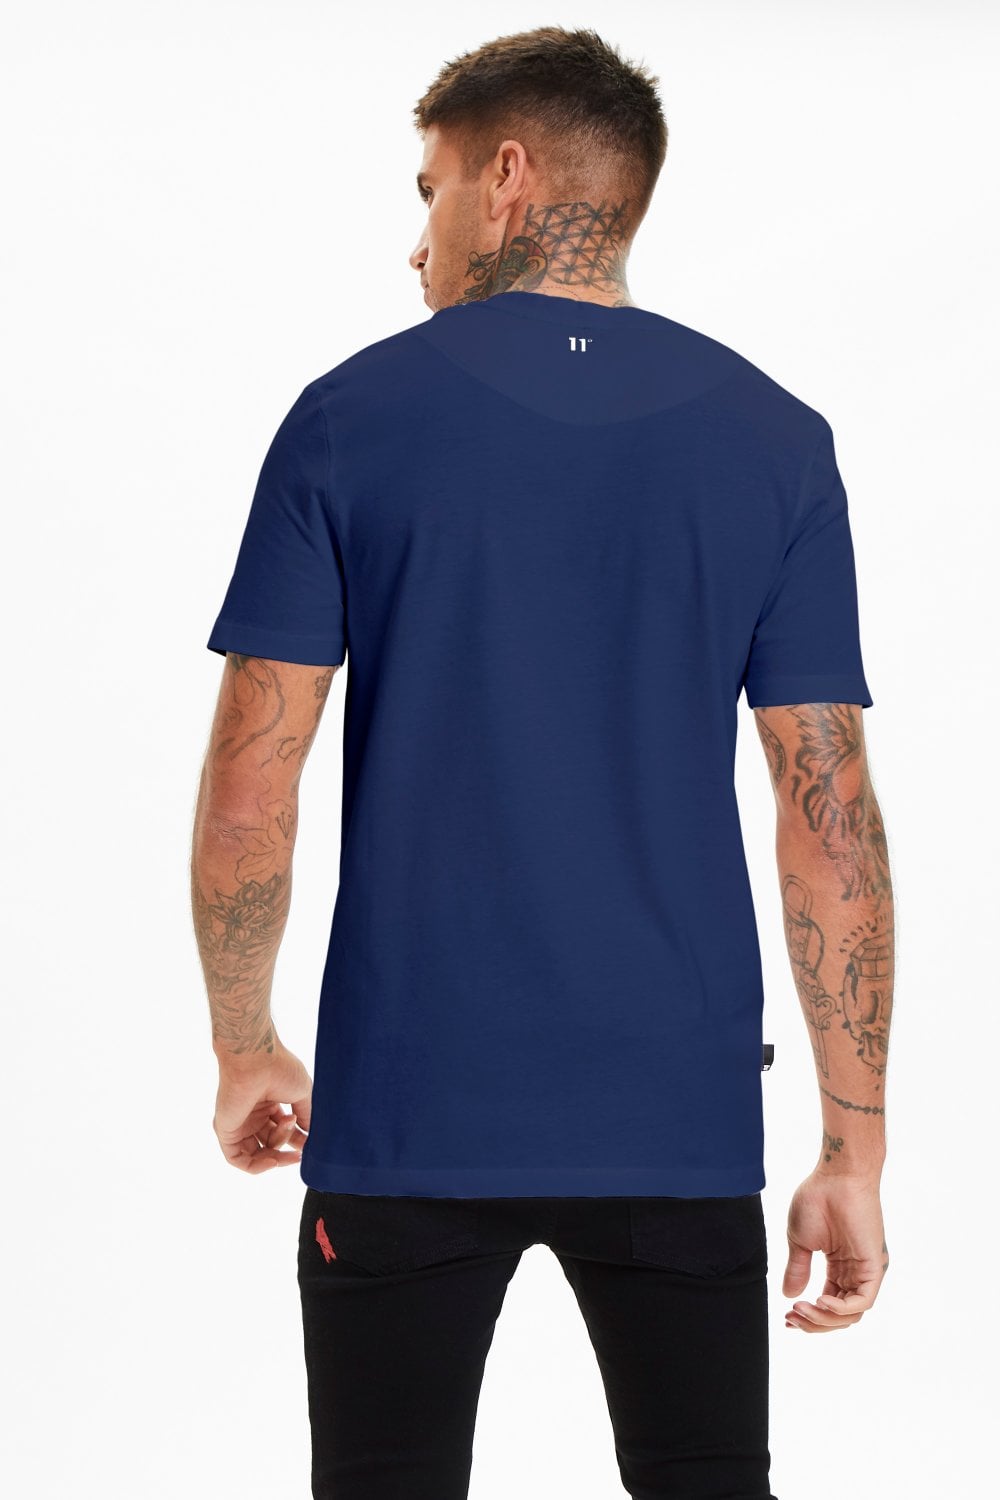 Core Regular Fit Navy T-Shirt - Spirit Clothing